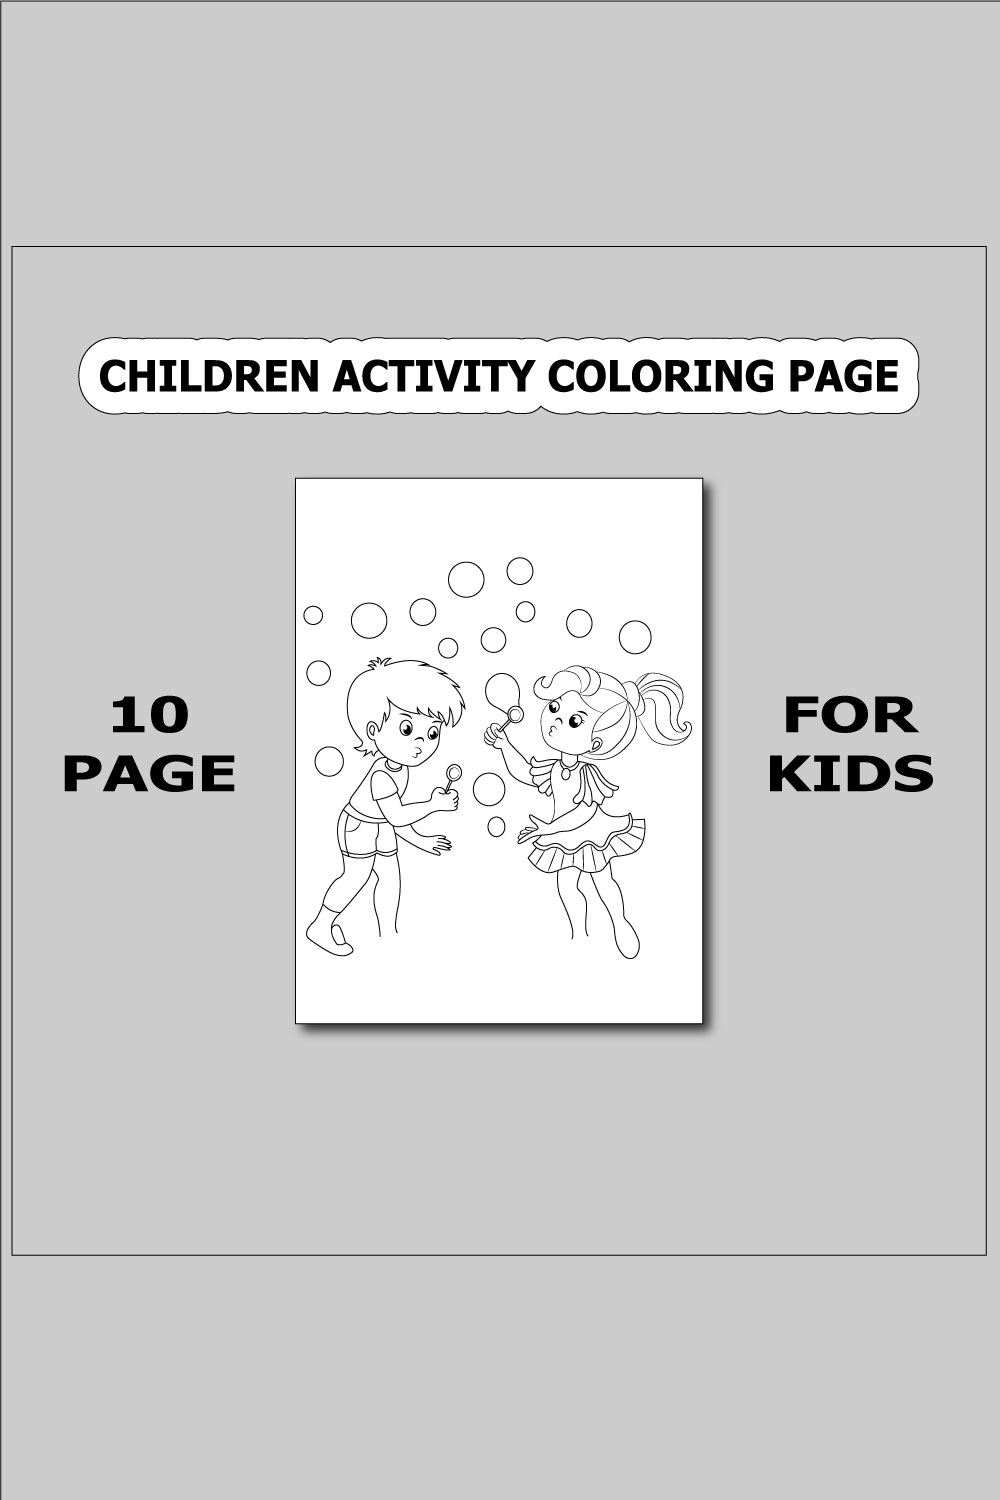 Children Activity Coloring Book pinterest image.